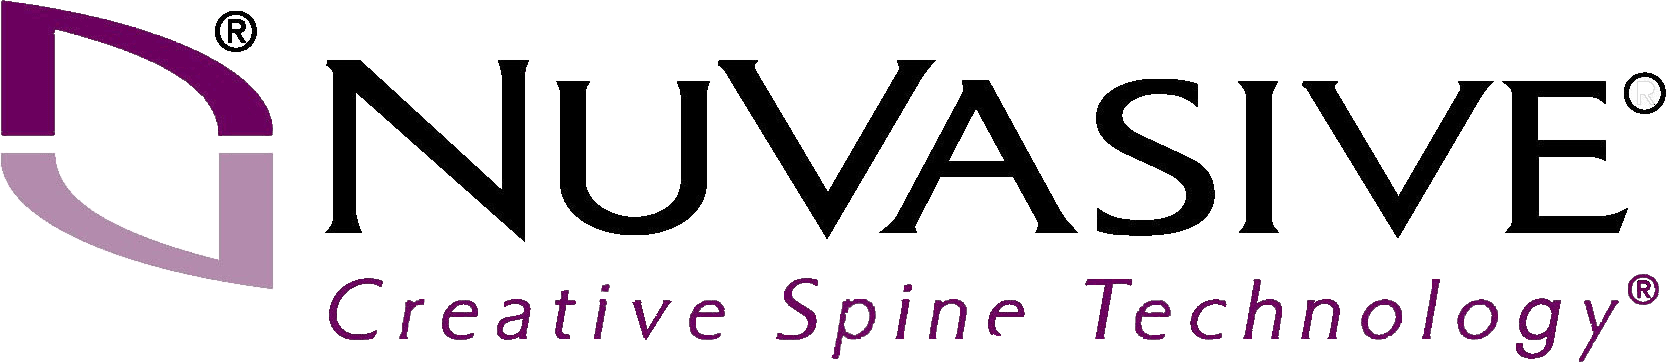 The nuvasive creative spine technology logo.